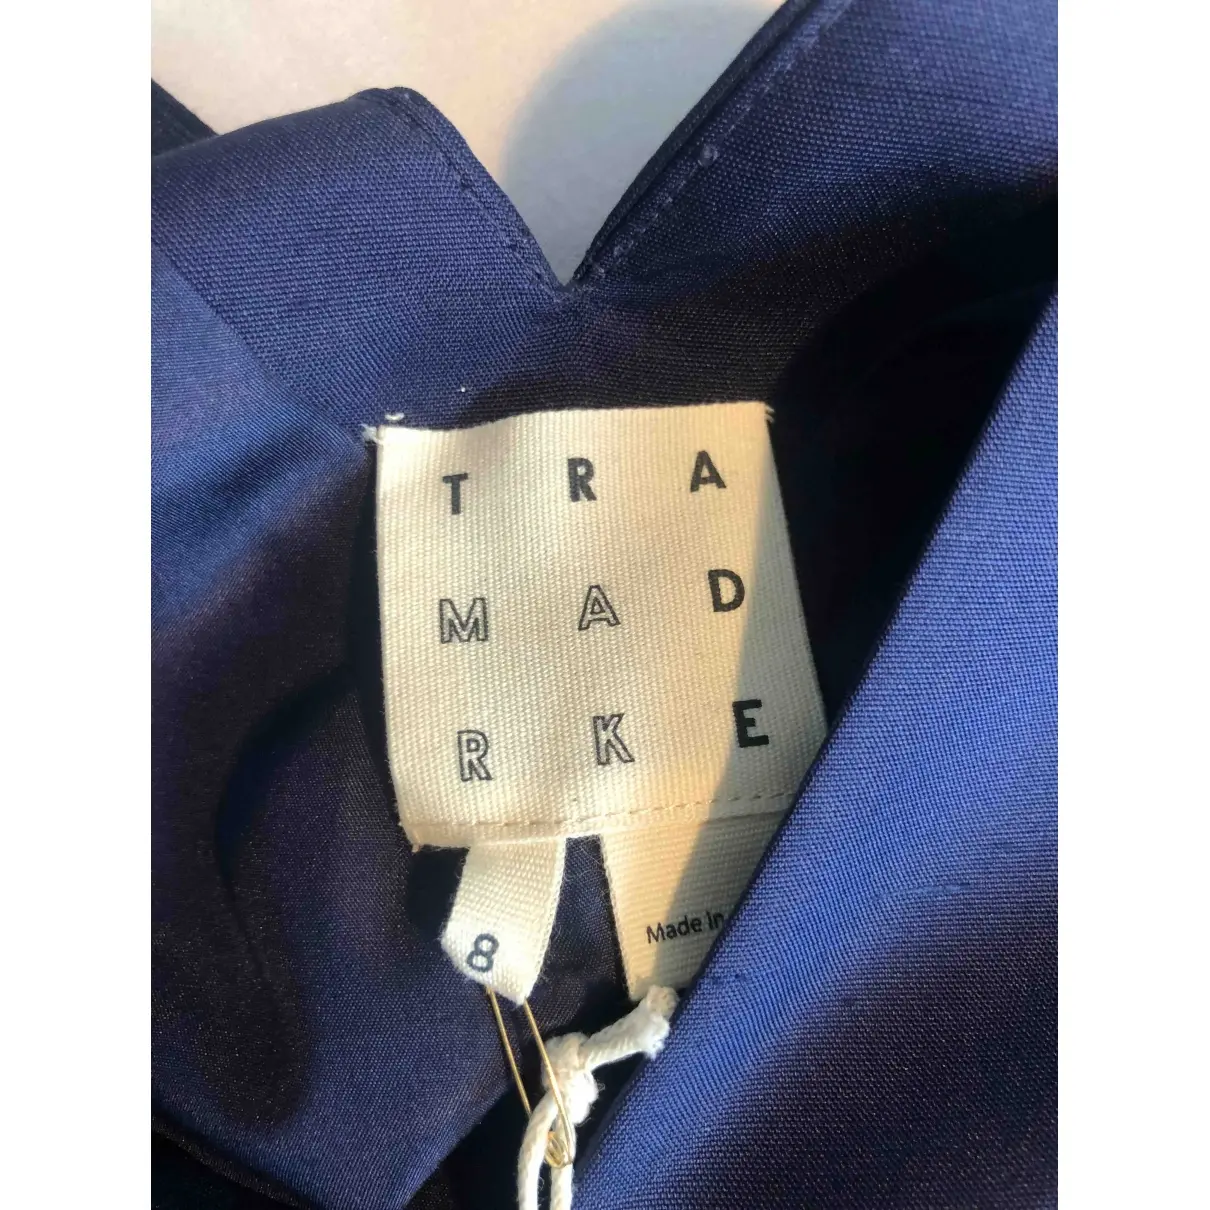 Buy Trademark Silk tunic online